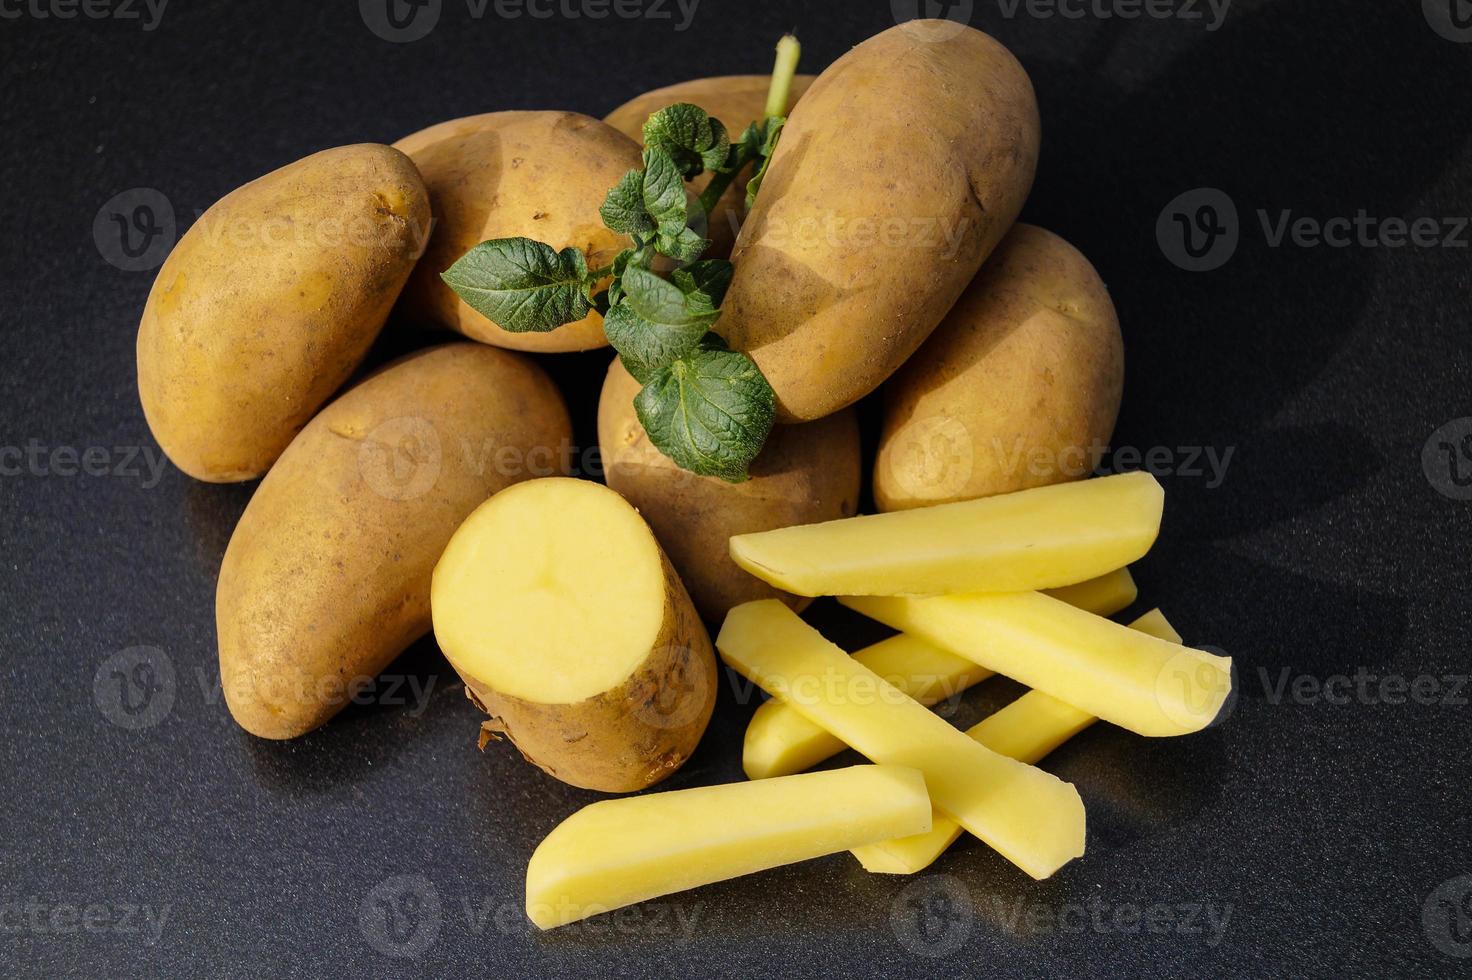 Duitse aardappelen direct na de oogst foto